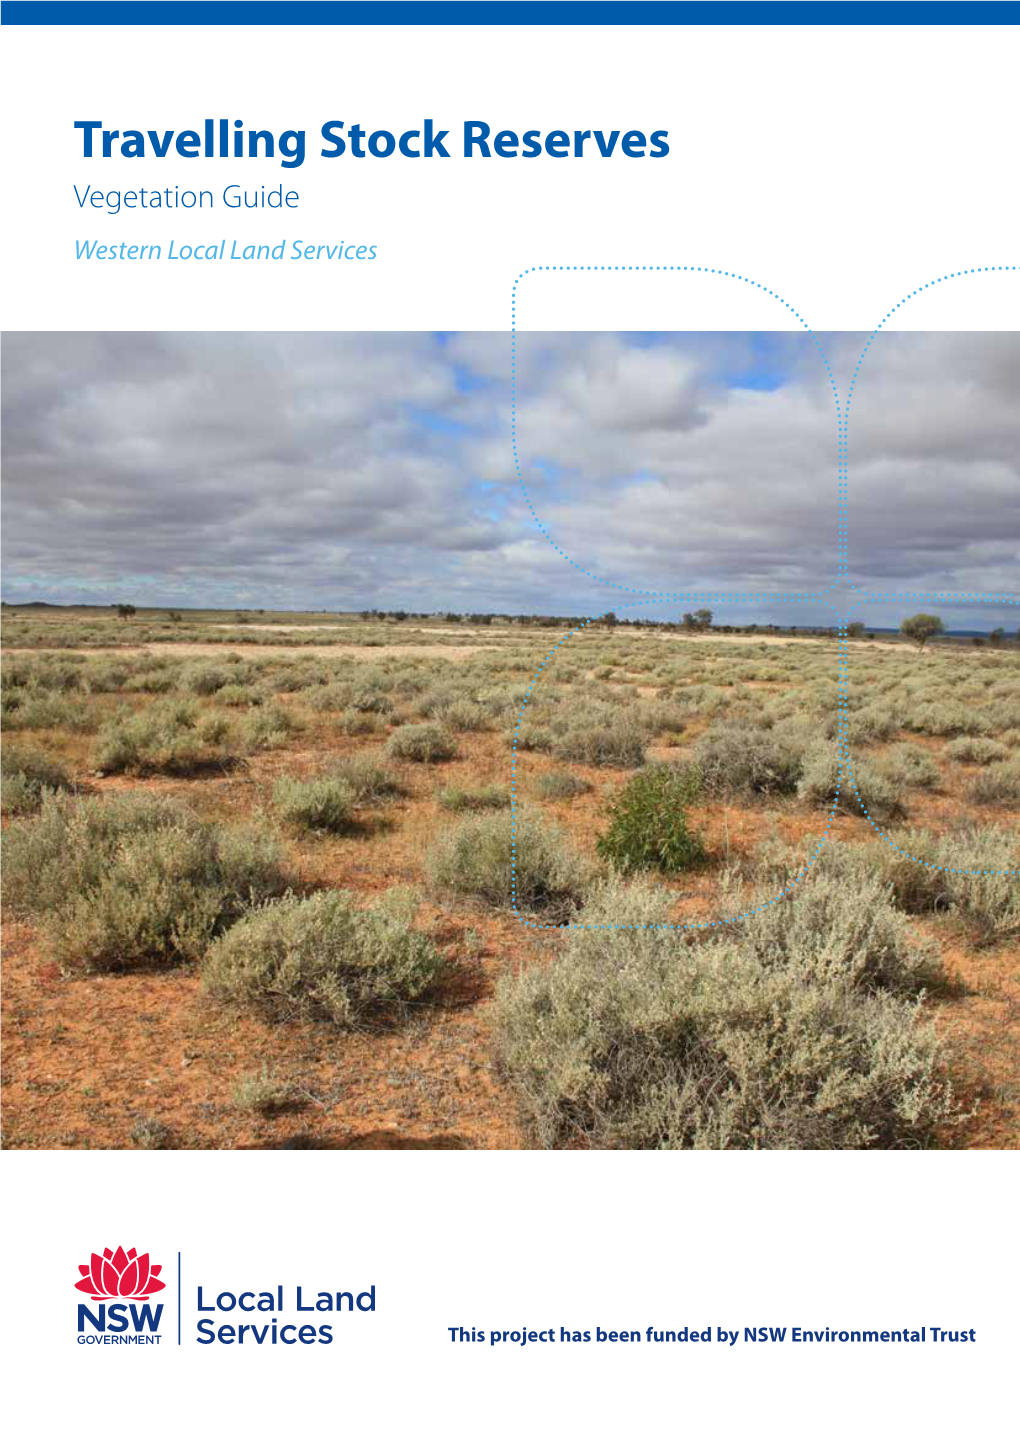 Western Vegetation Guide Feb 2020 PDF 3.8 MB